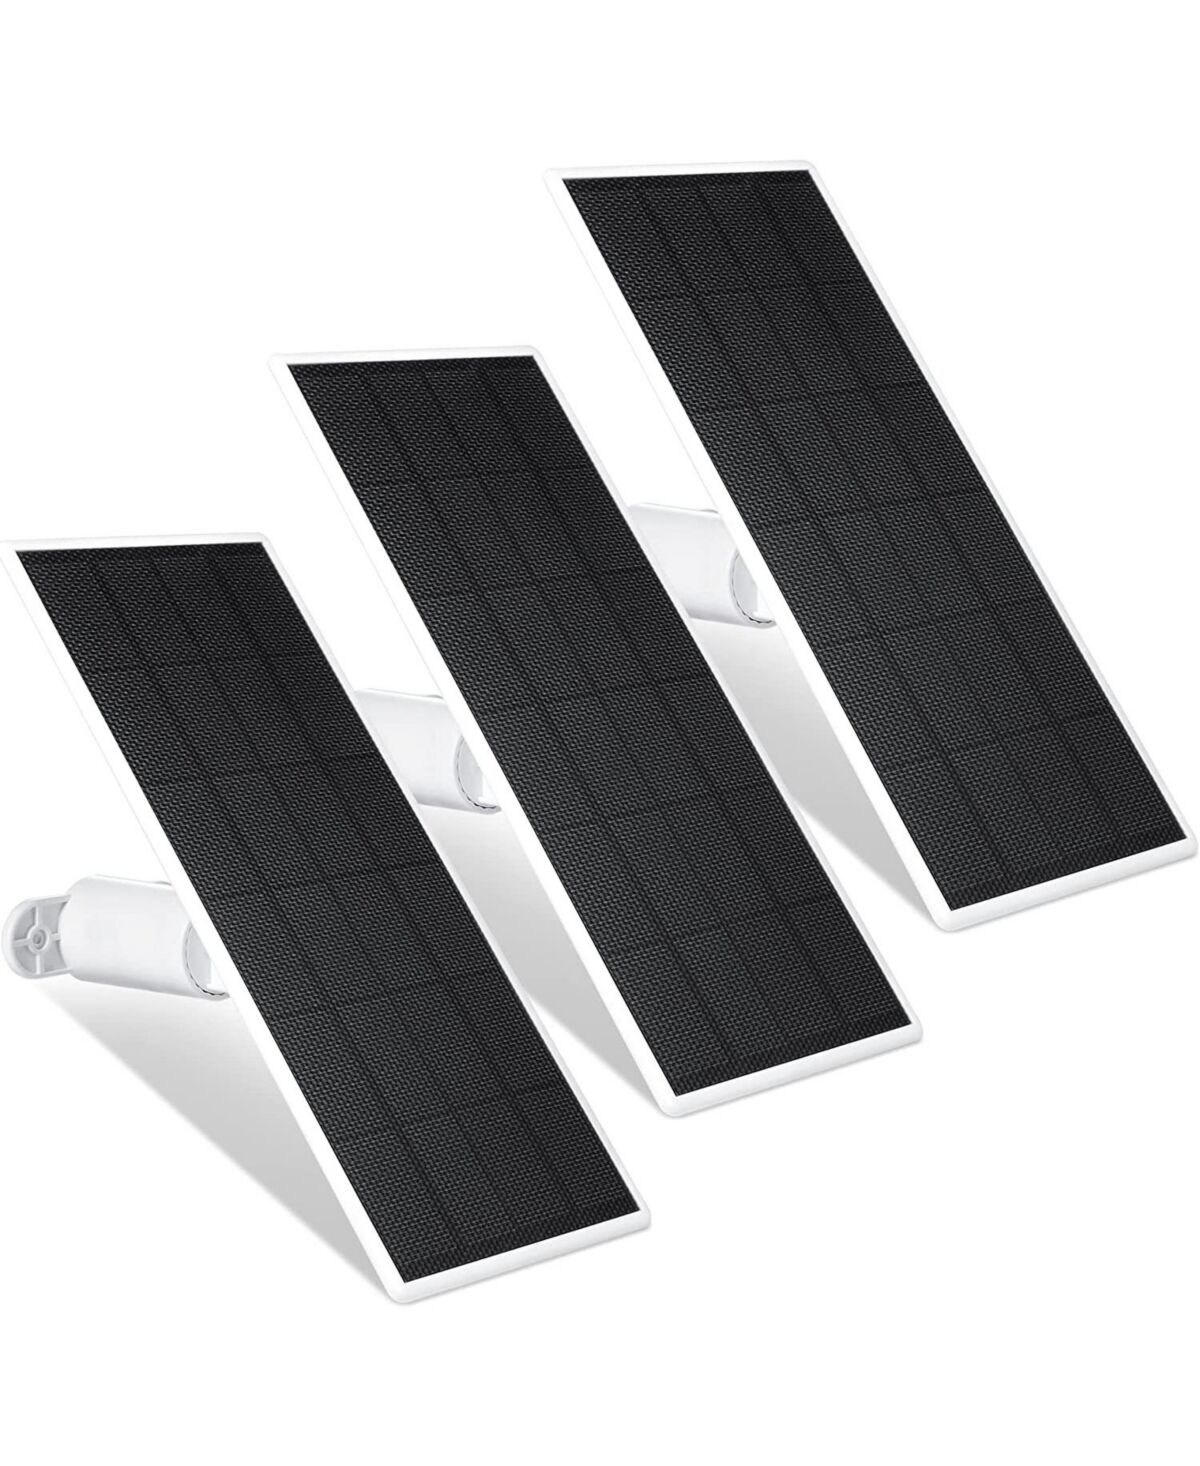 Wasserstein Solar Panel for Google Nest Cam Outdoor or Indoor, Battery - 2.5W Solar Power - Made for Google Nest (3 Pack) - White